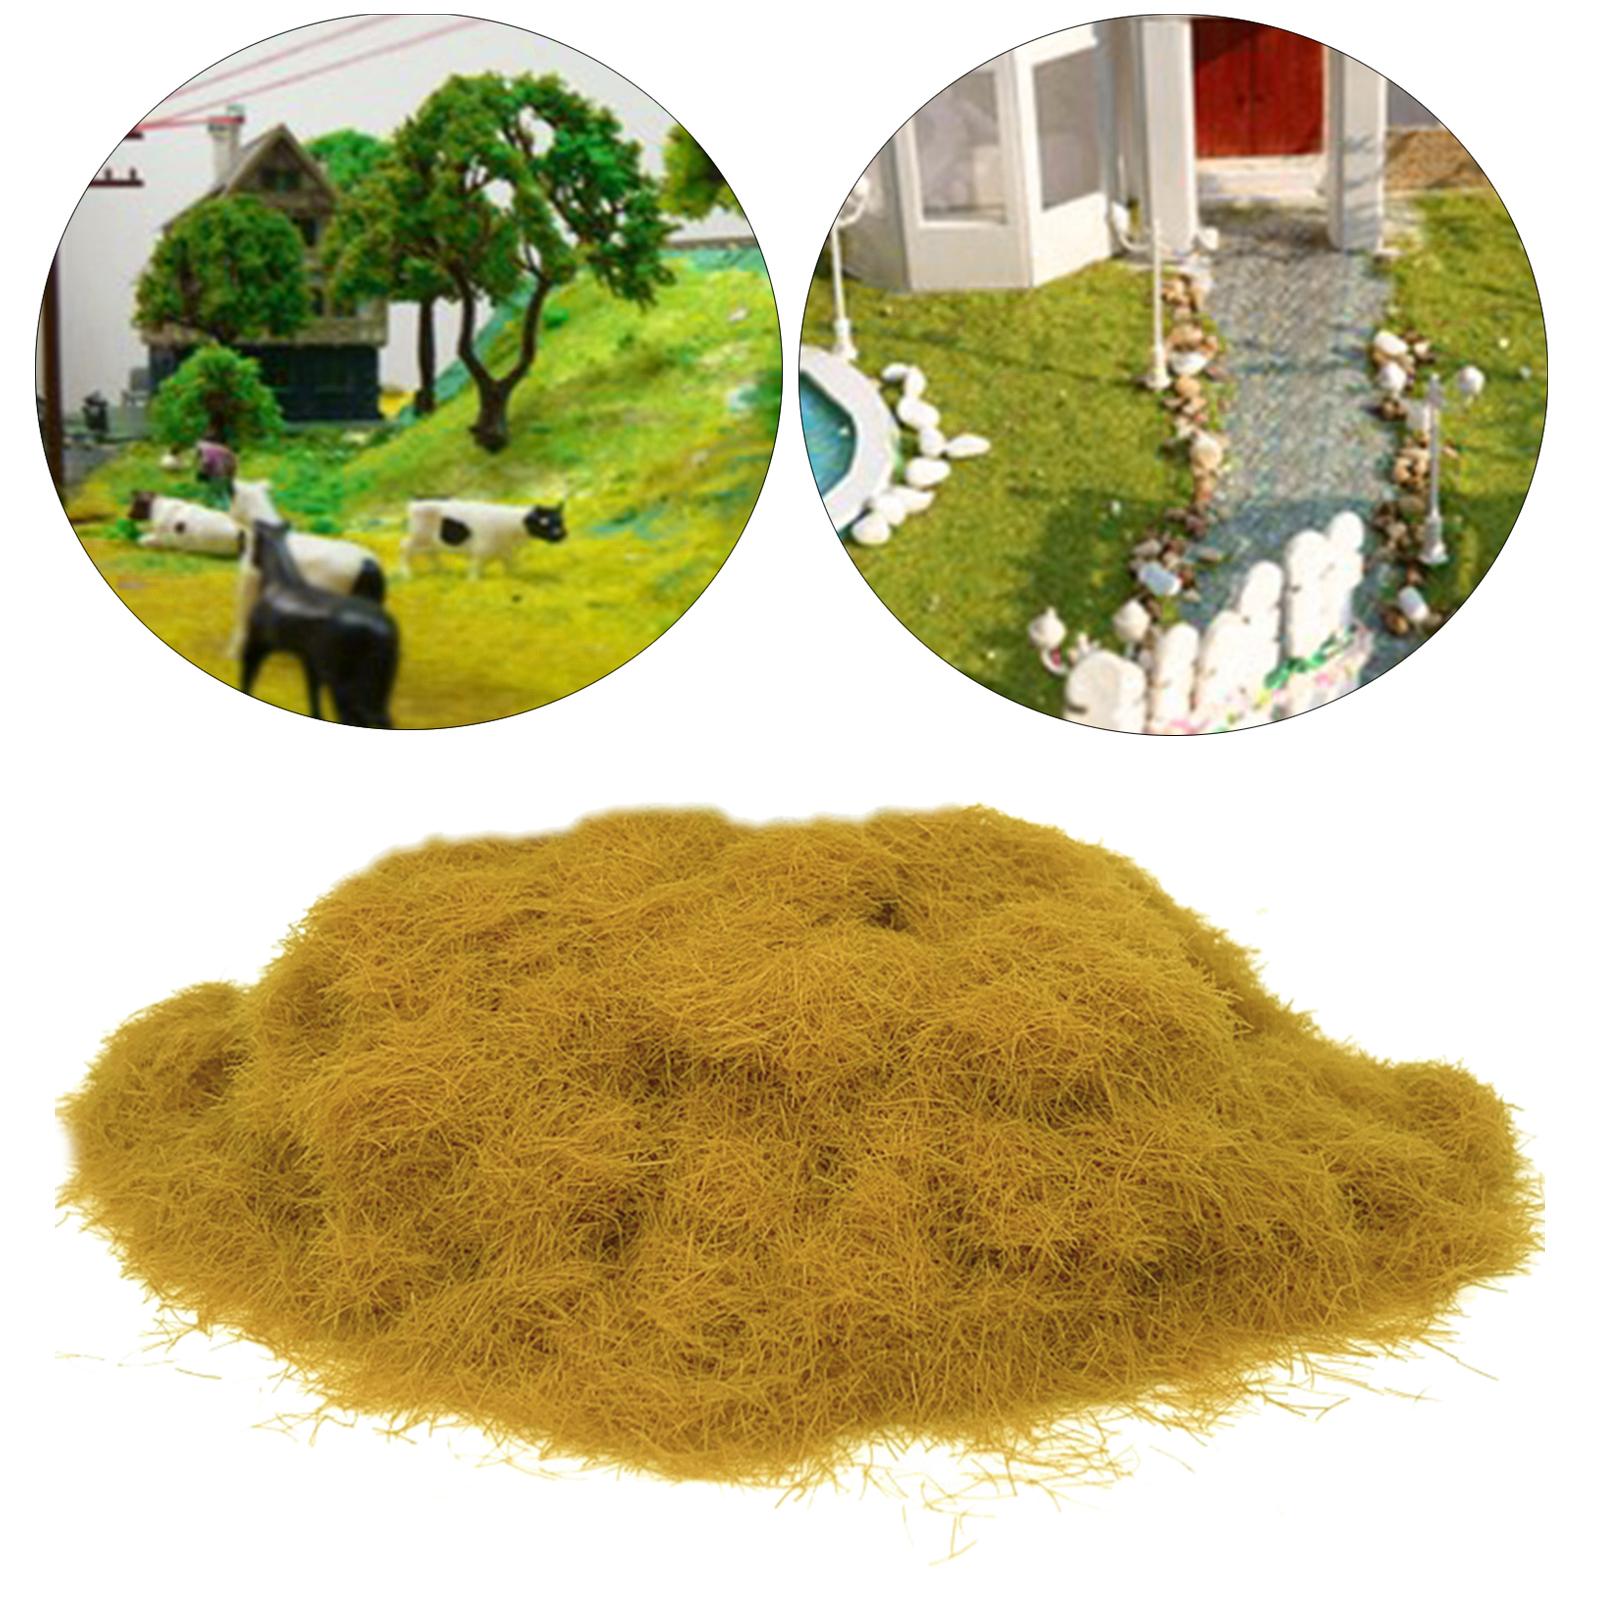 Miniature Static Grass 5mm Fairy Garden Scene Model Sand Table Grass Powder straw yellow